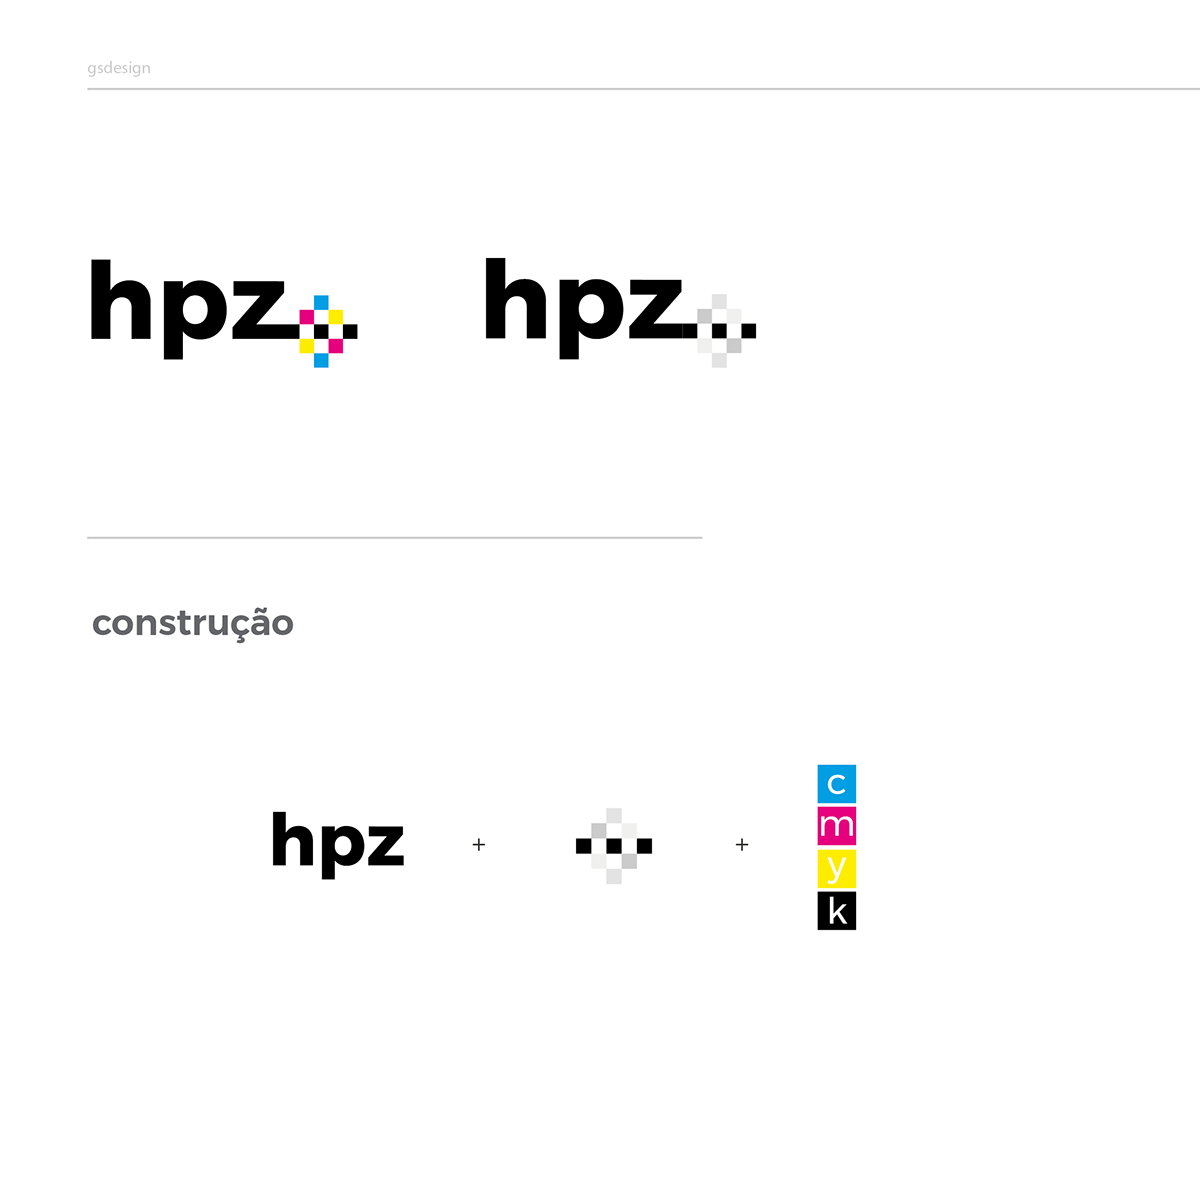 hpz ricoh logo copy print solutions pixel brand